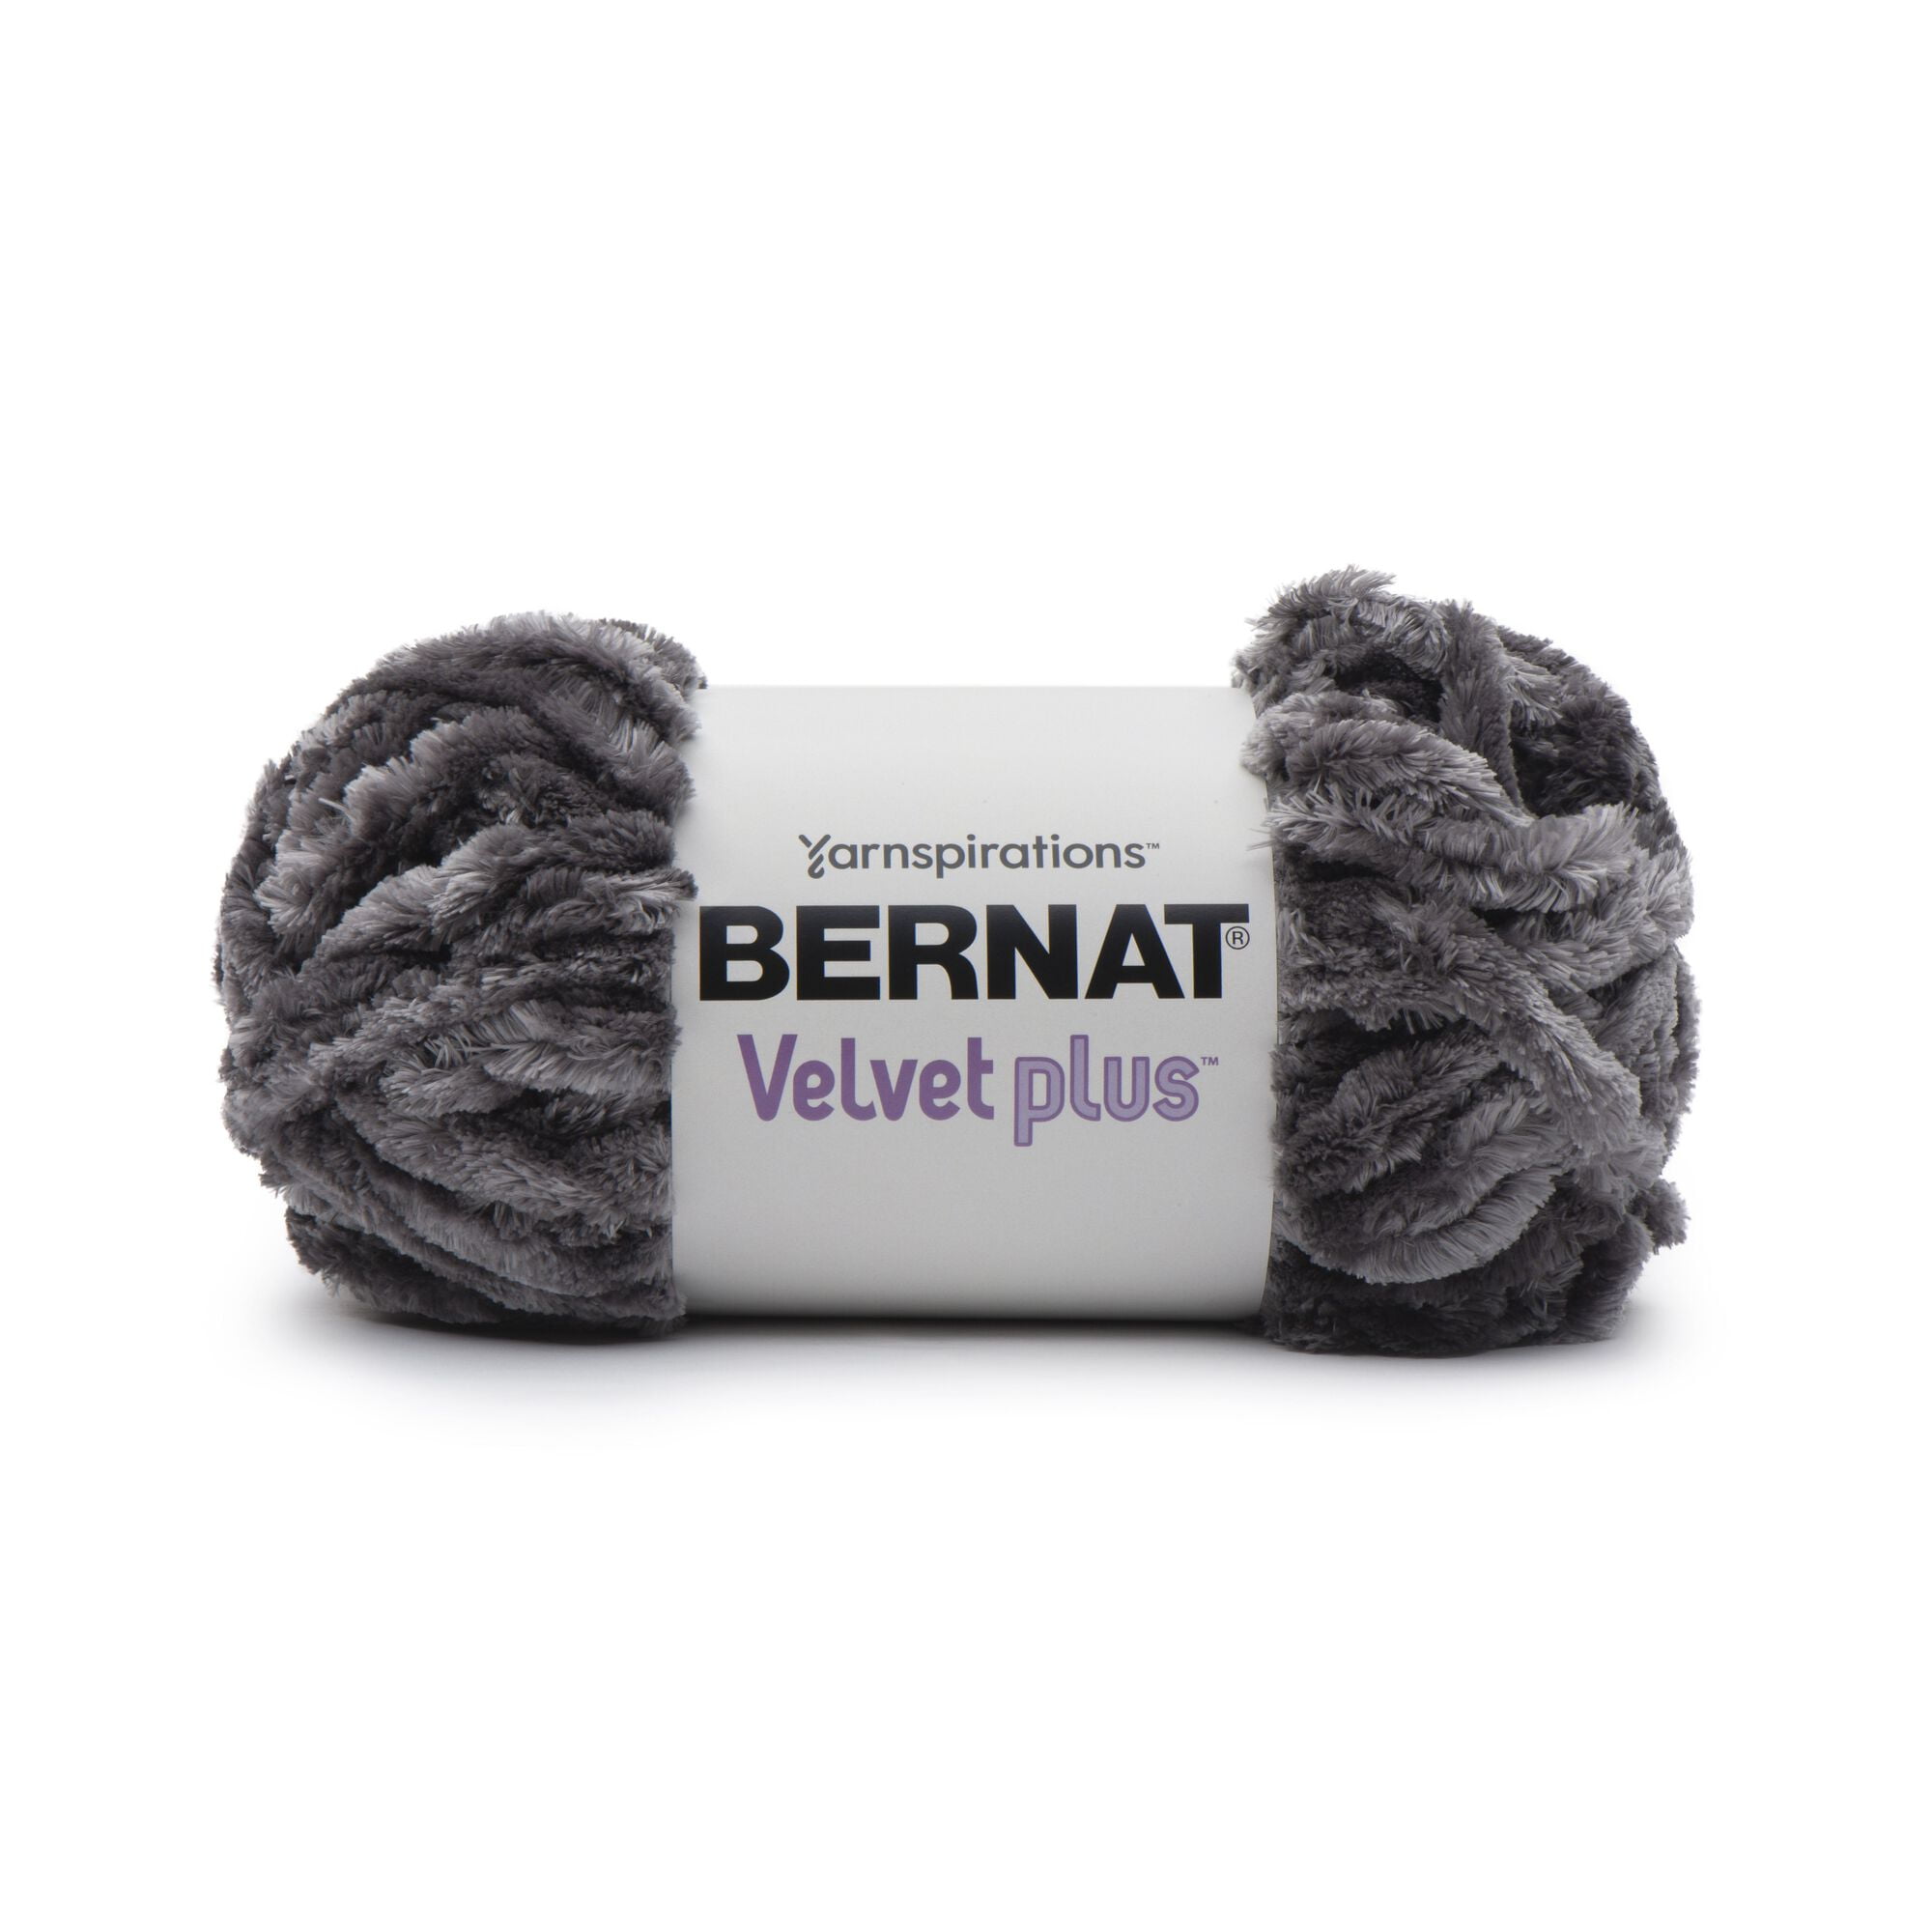 Bernat Velvet Plus Yarn-Burgundy Plum, 1 count - Dillons Food Stores